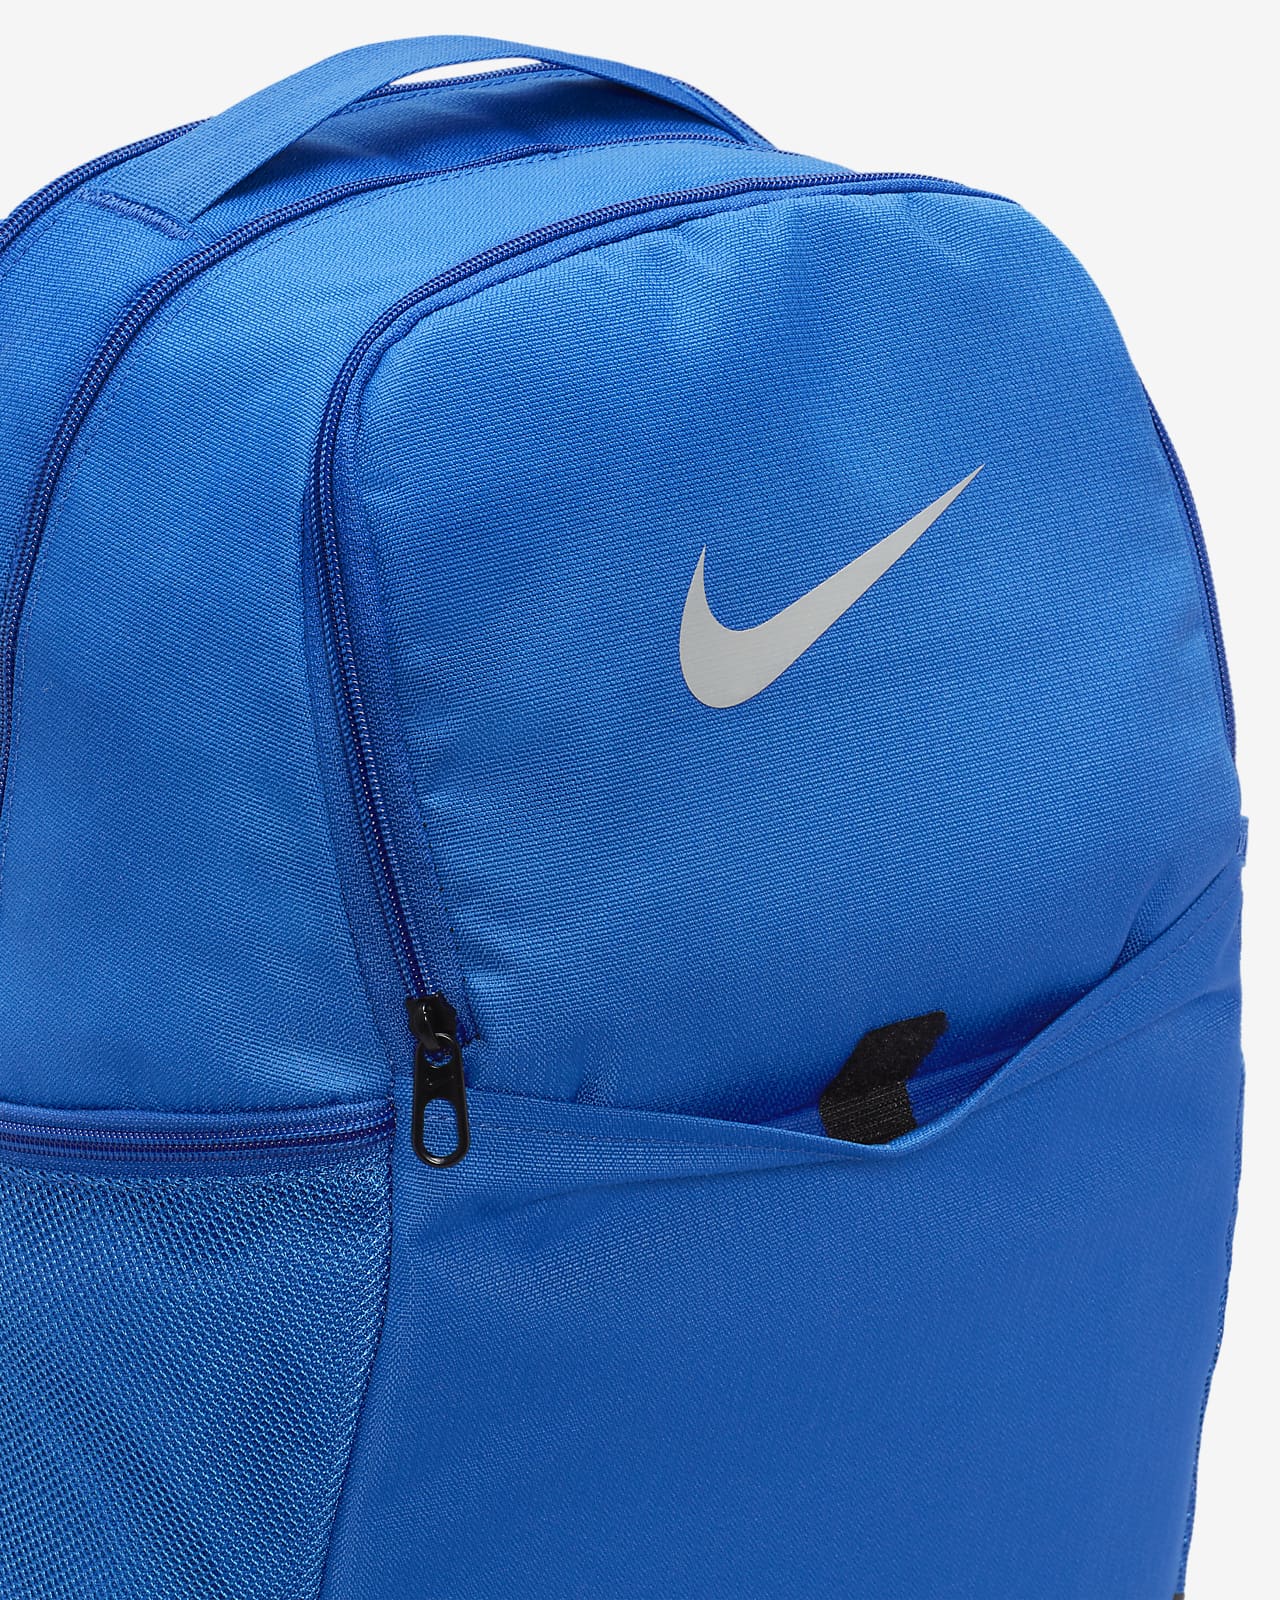 Nike Brasilia Medium Training Backpack, Nike Backpack for Women and Me–